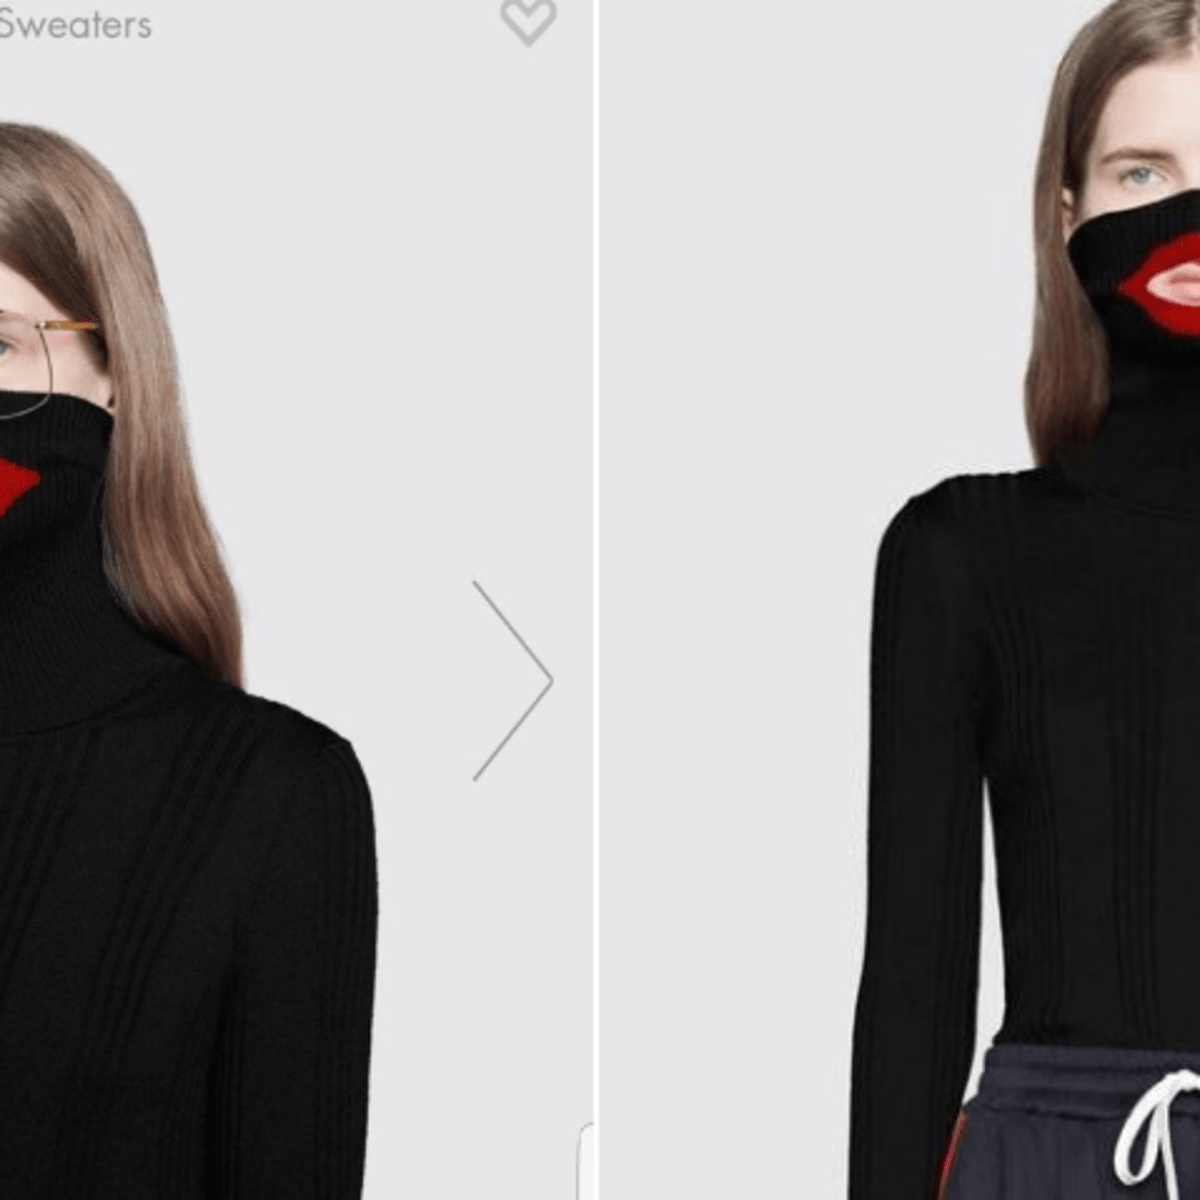 Gucci Apologizes for Controversial 'Blackface' Sweater - Fashionista